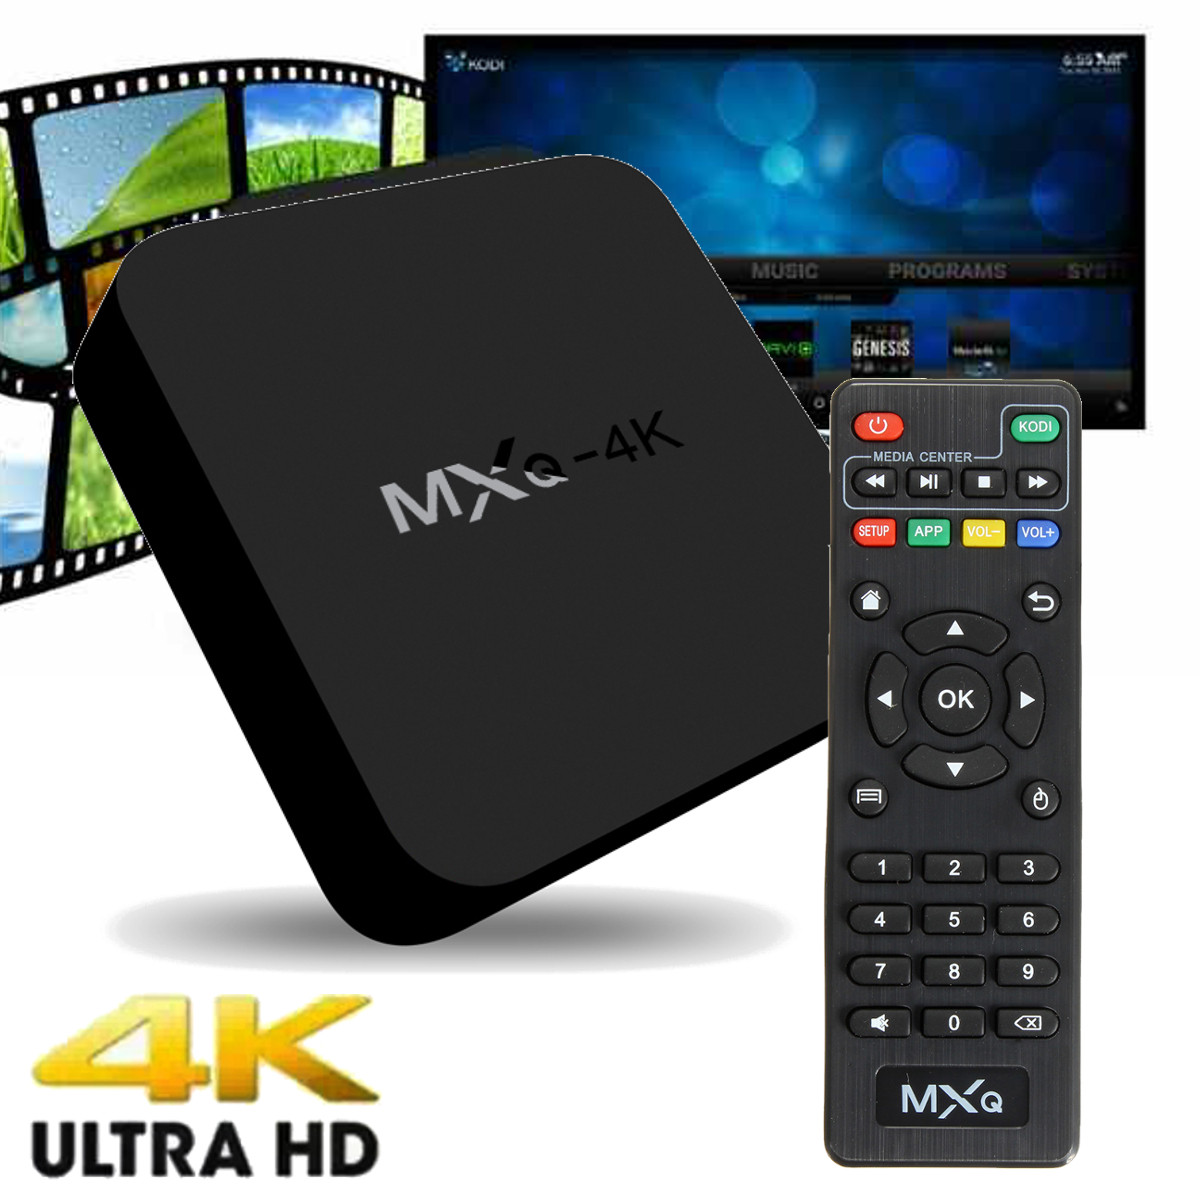 MXQ 4K Smart TV Bou00eete Box 2.4G WiFi Android 4.4 Quad Core 8GB KODI XBMC